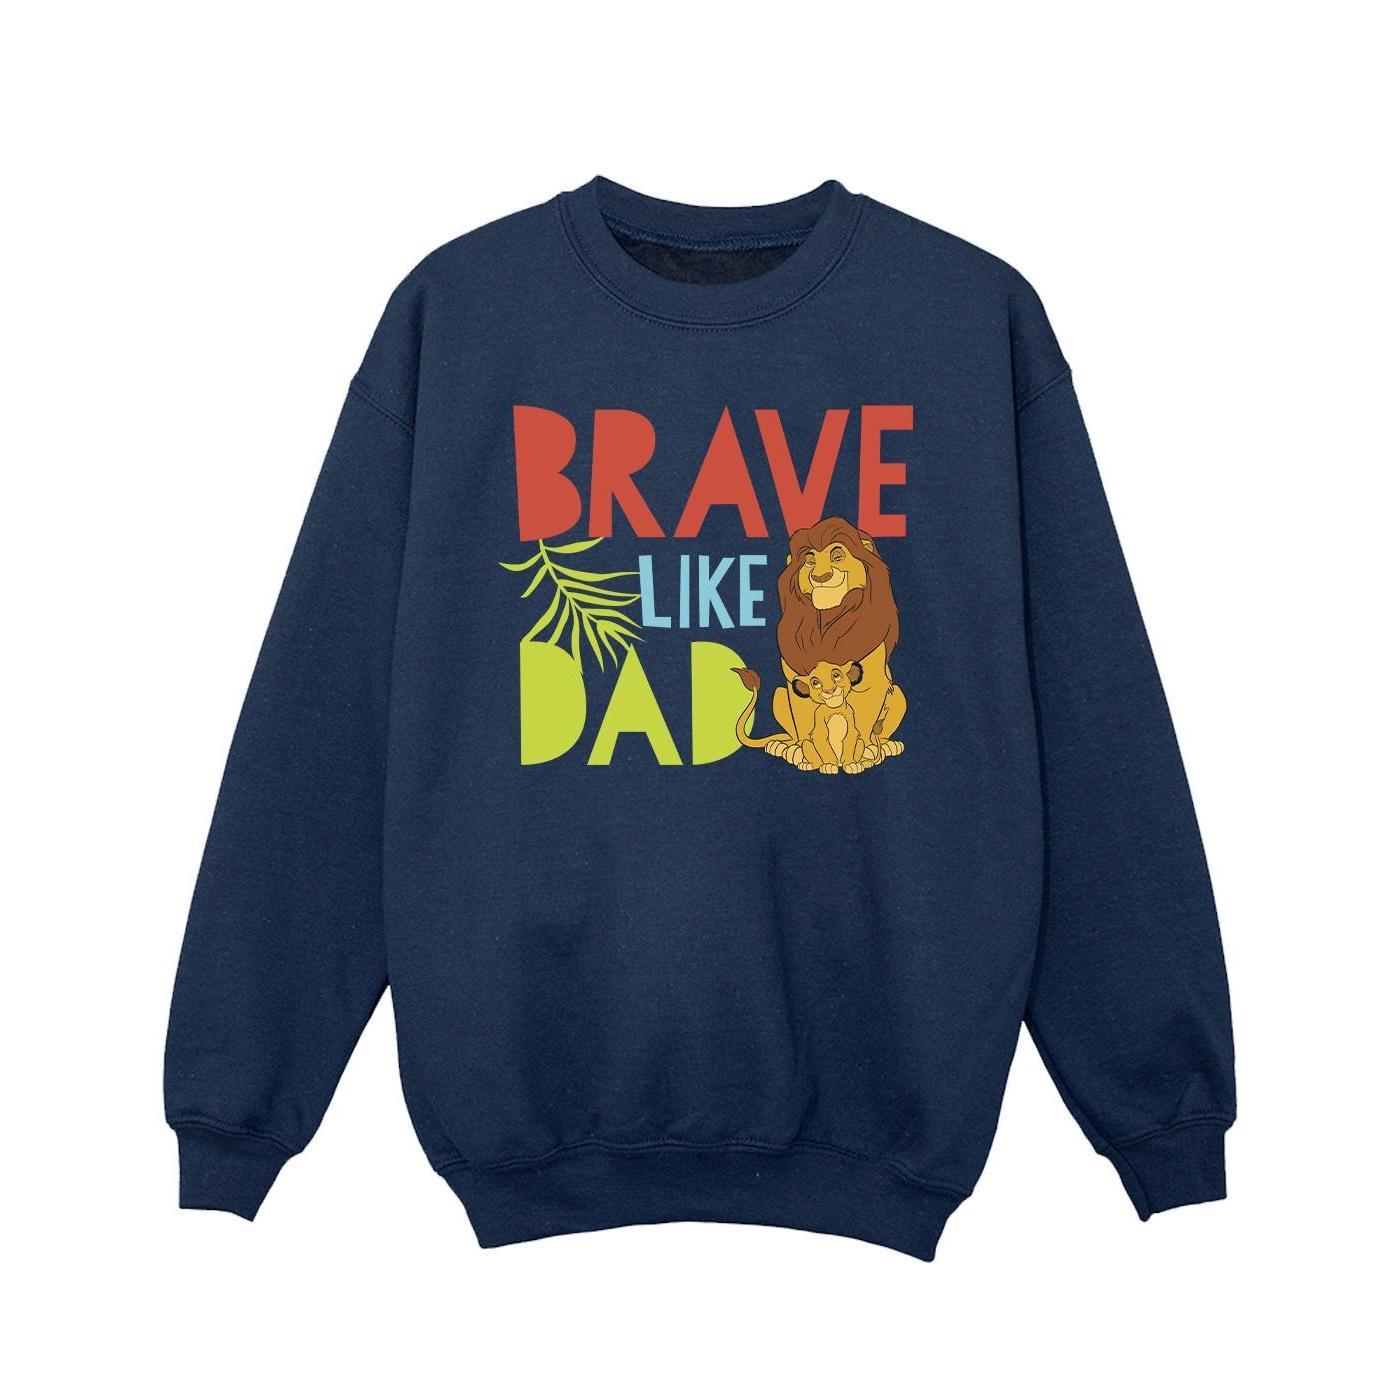 Disney Girls The Lion King Brave Like Dad Sweatshirt (Navy Blue) (7-8 Years)